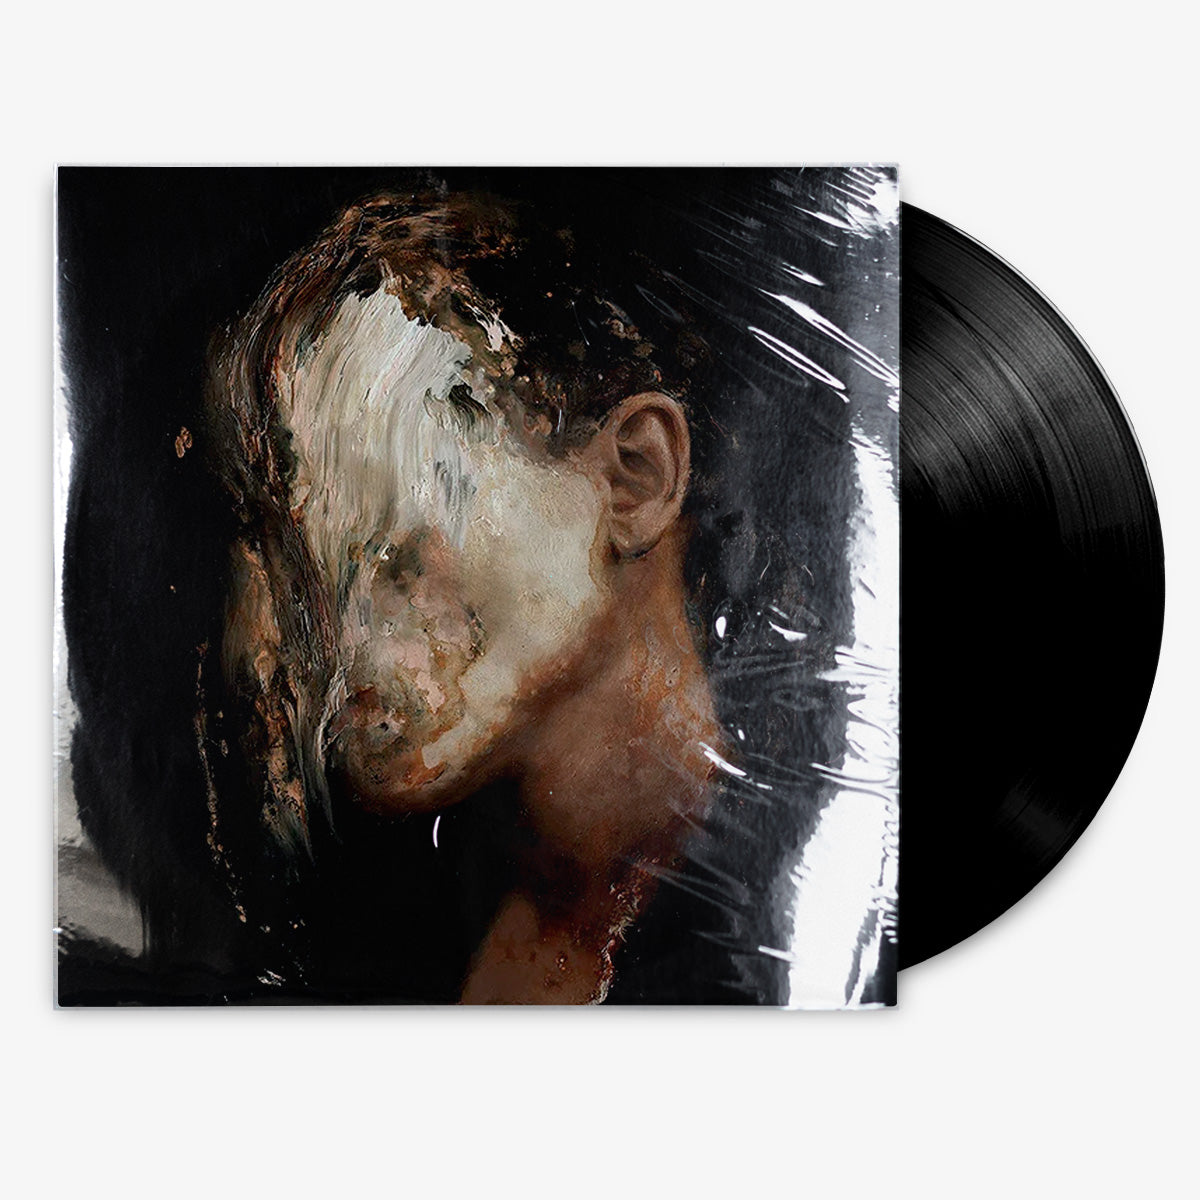 070 Shake 'You Can’t Kill Me' 2x12" LP Black vinyl